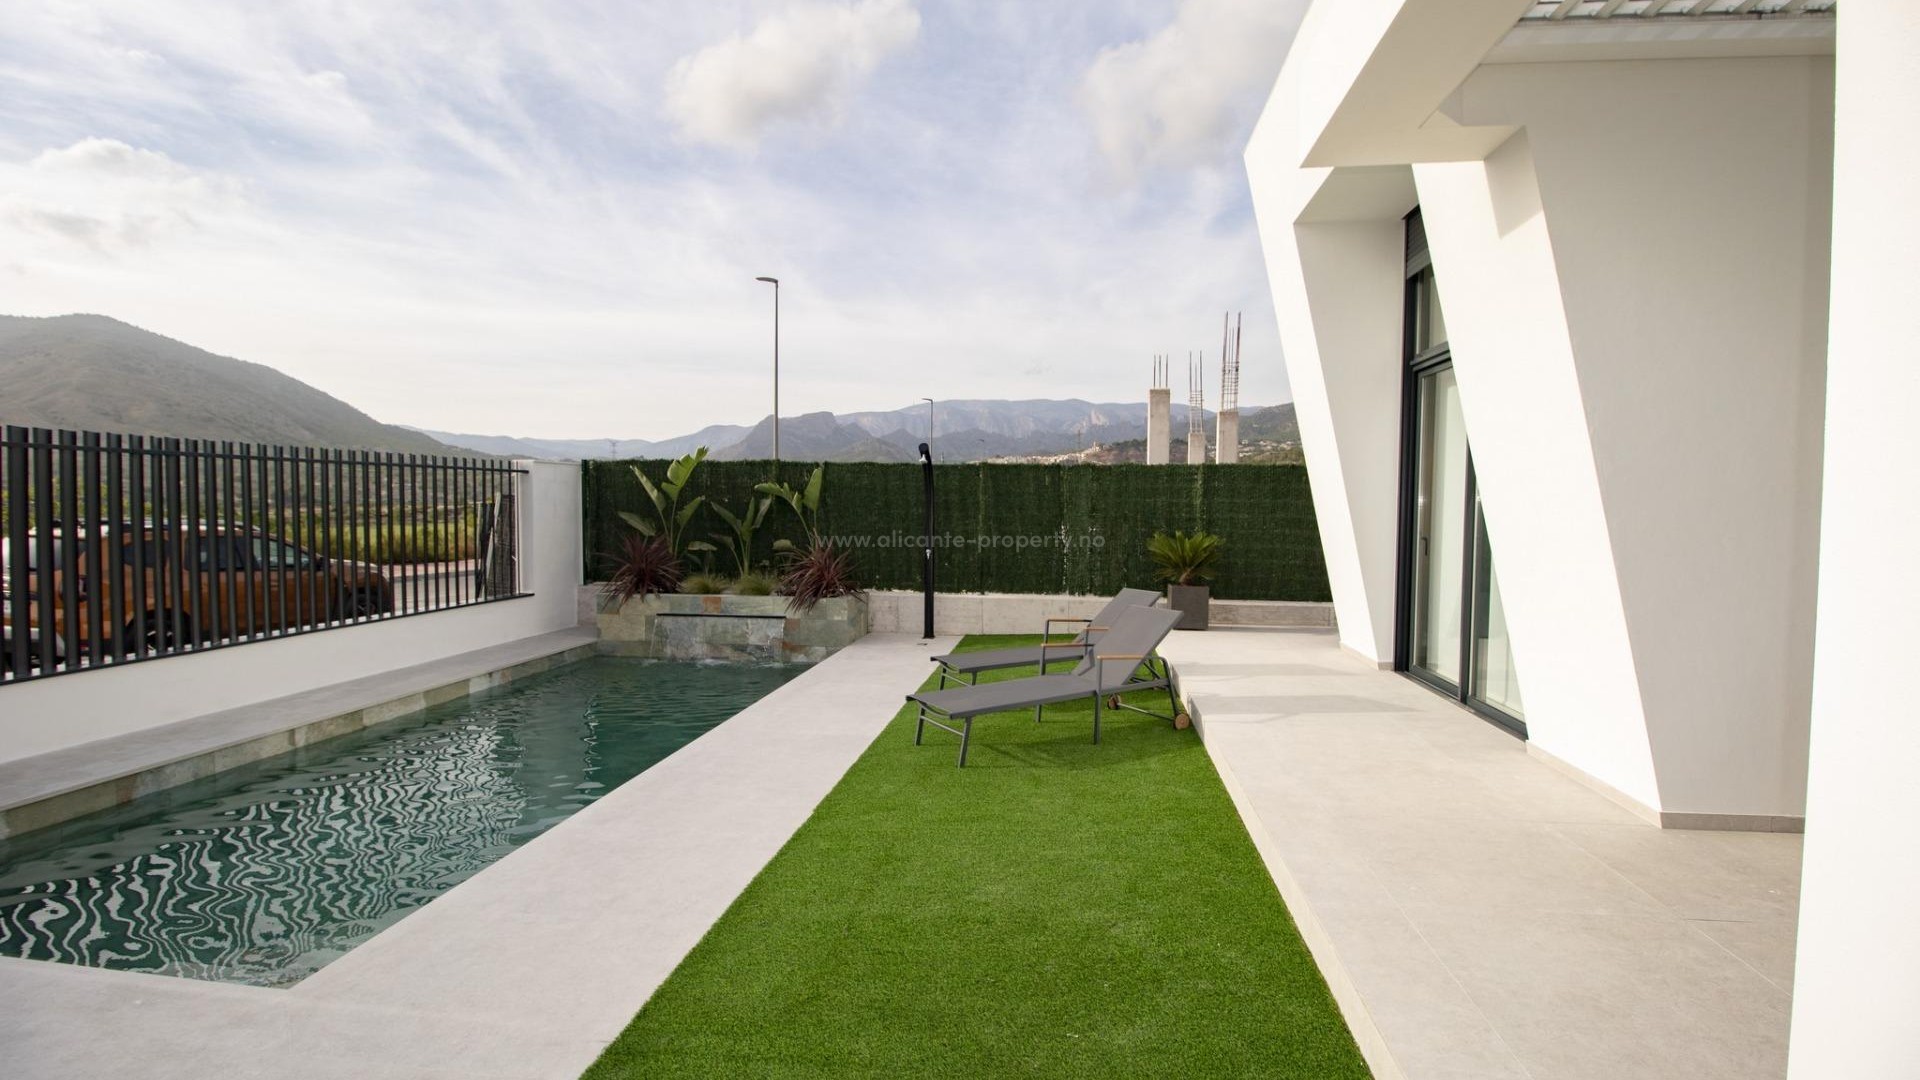 22 villaer/hus i Finestrat ved Puig Campana Golf (1 min.), 3 soverom, 3 bad, terrasse, solarium, privat hage med svømmebasseng og parkeringsplass.